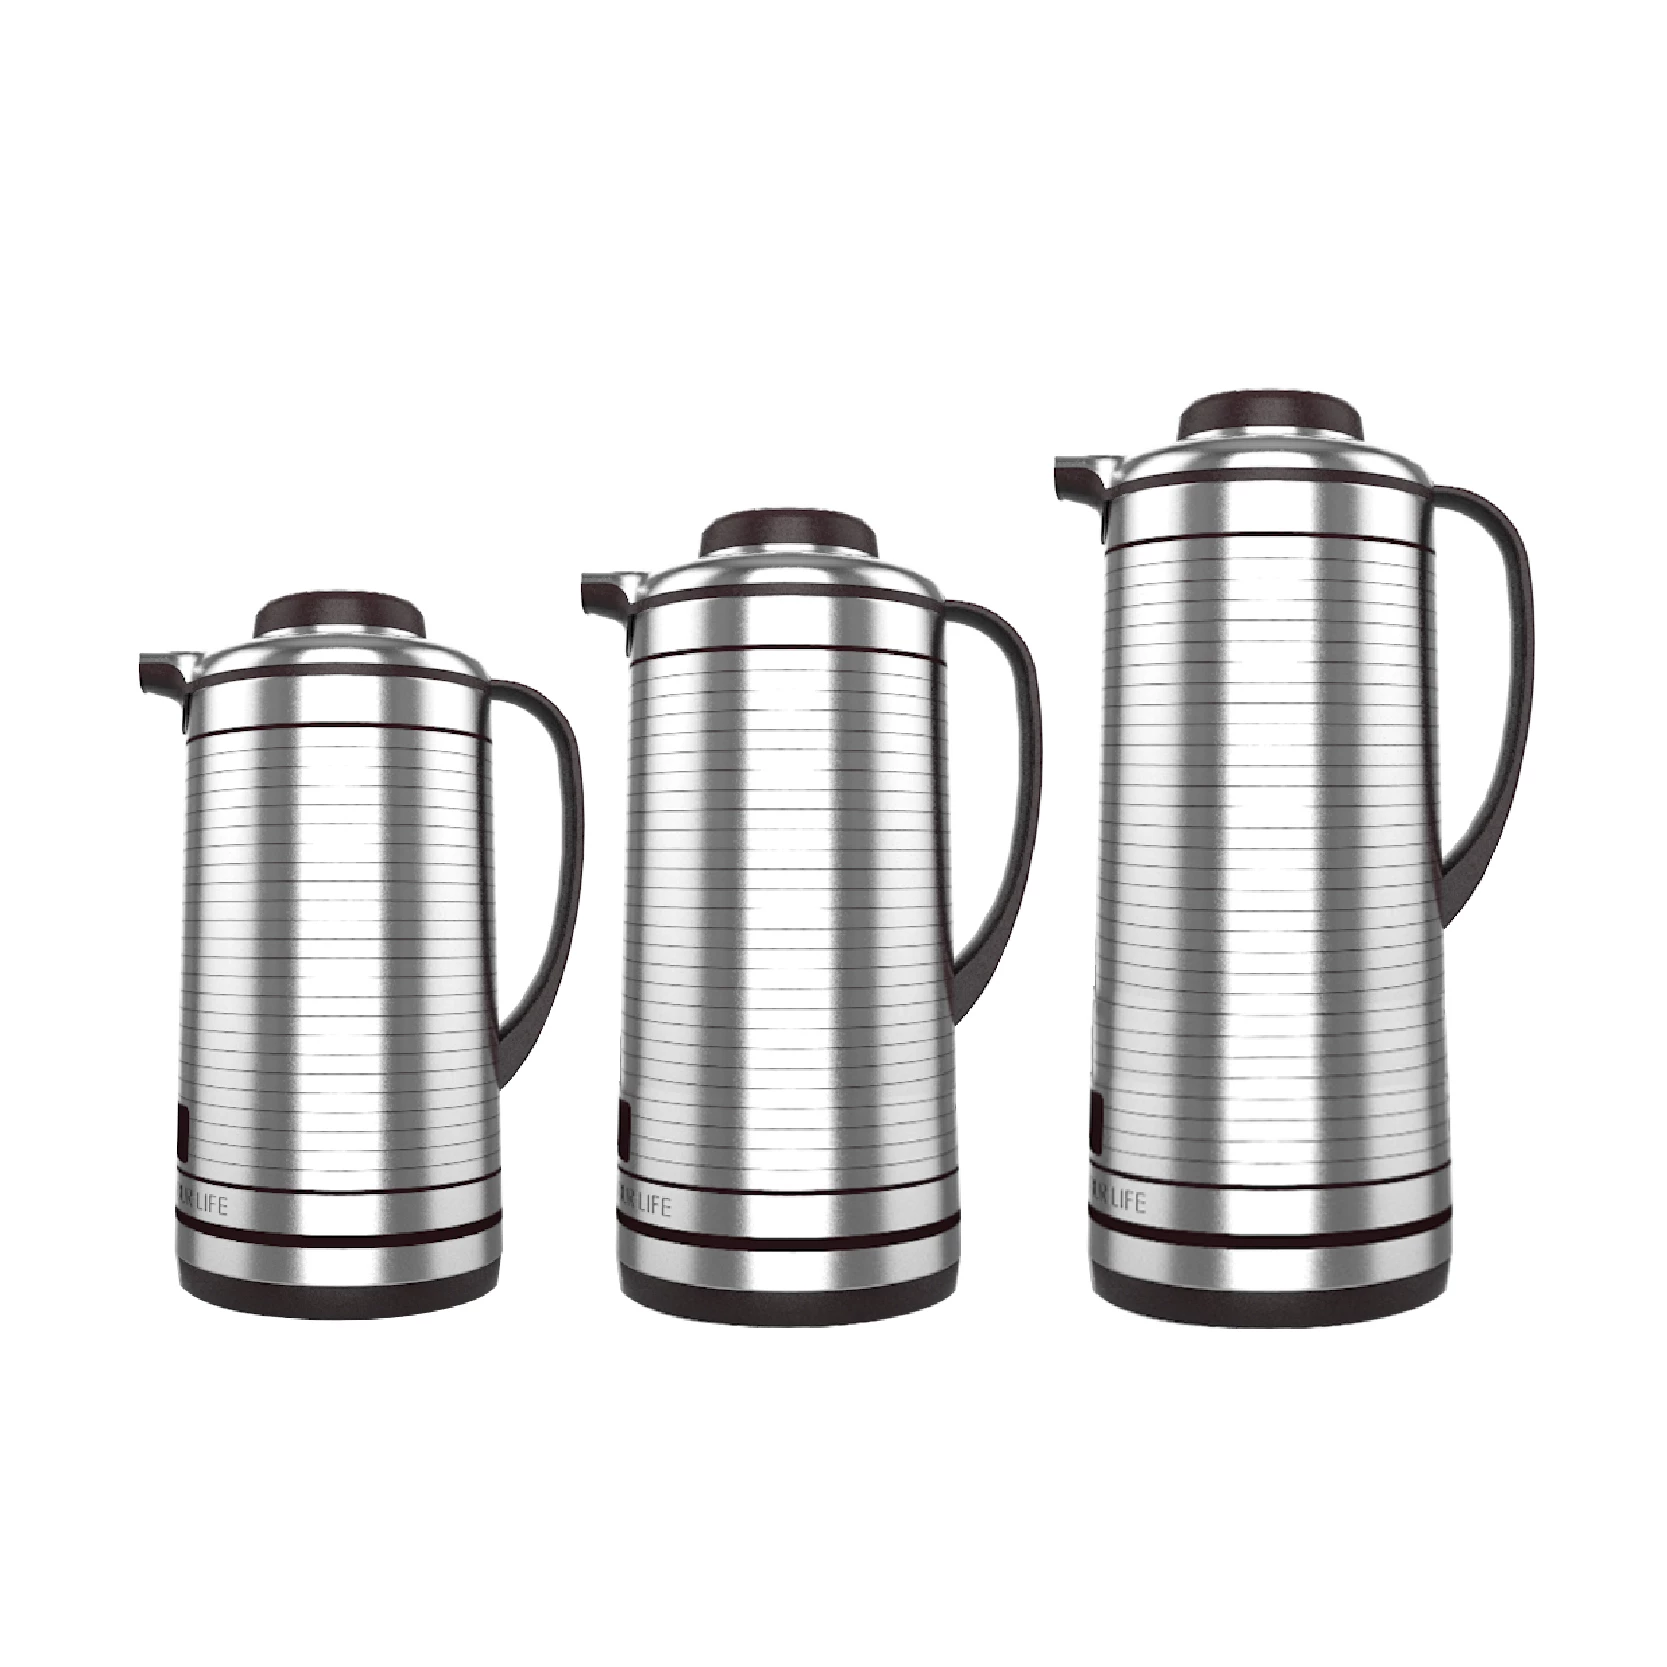 Coffee Pots - Series 6